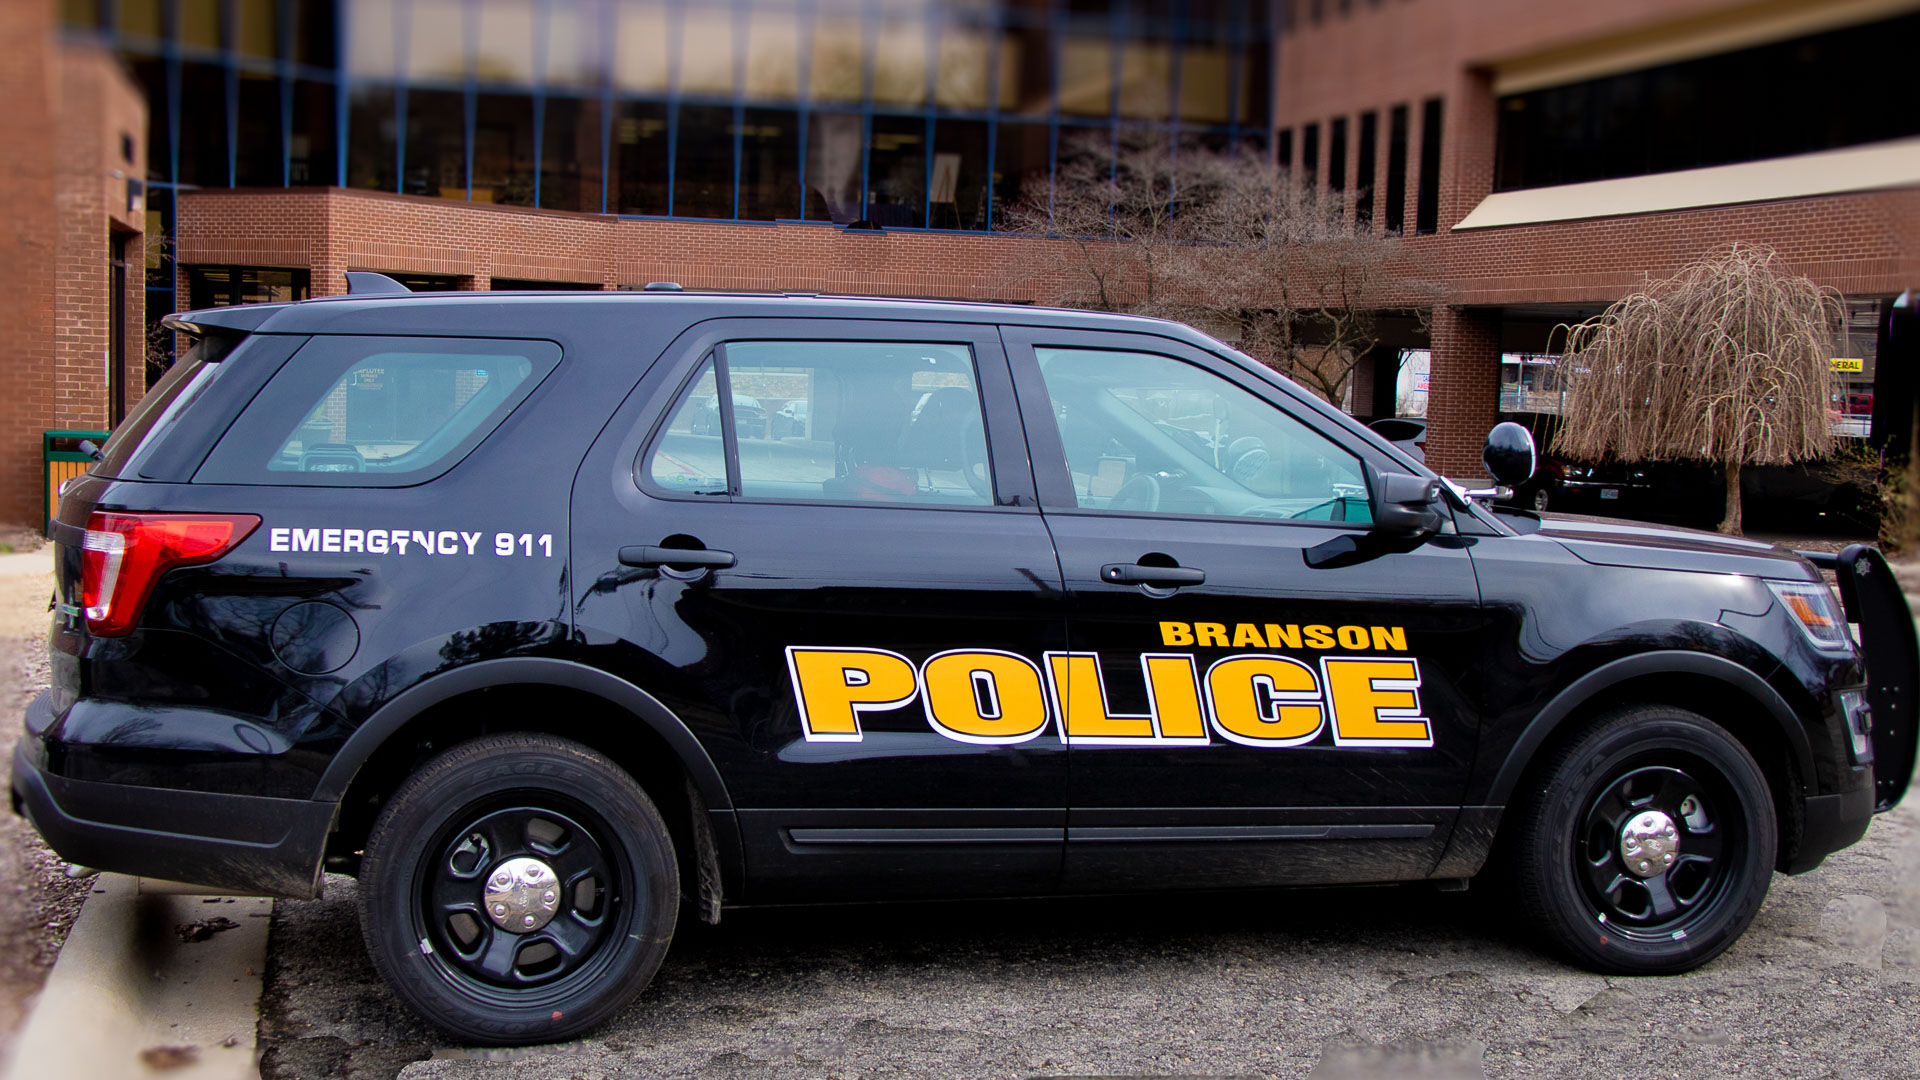 190128 Branson Police SUV - FBI UCR Report Shows Branson Crime Rate Down in 2018